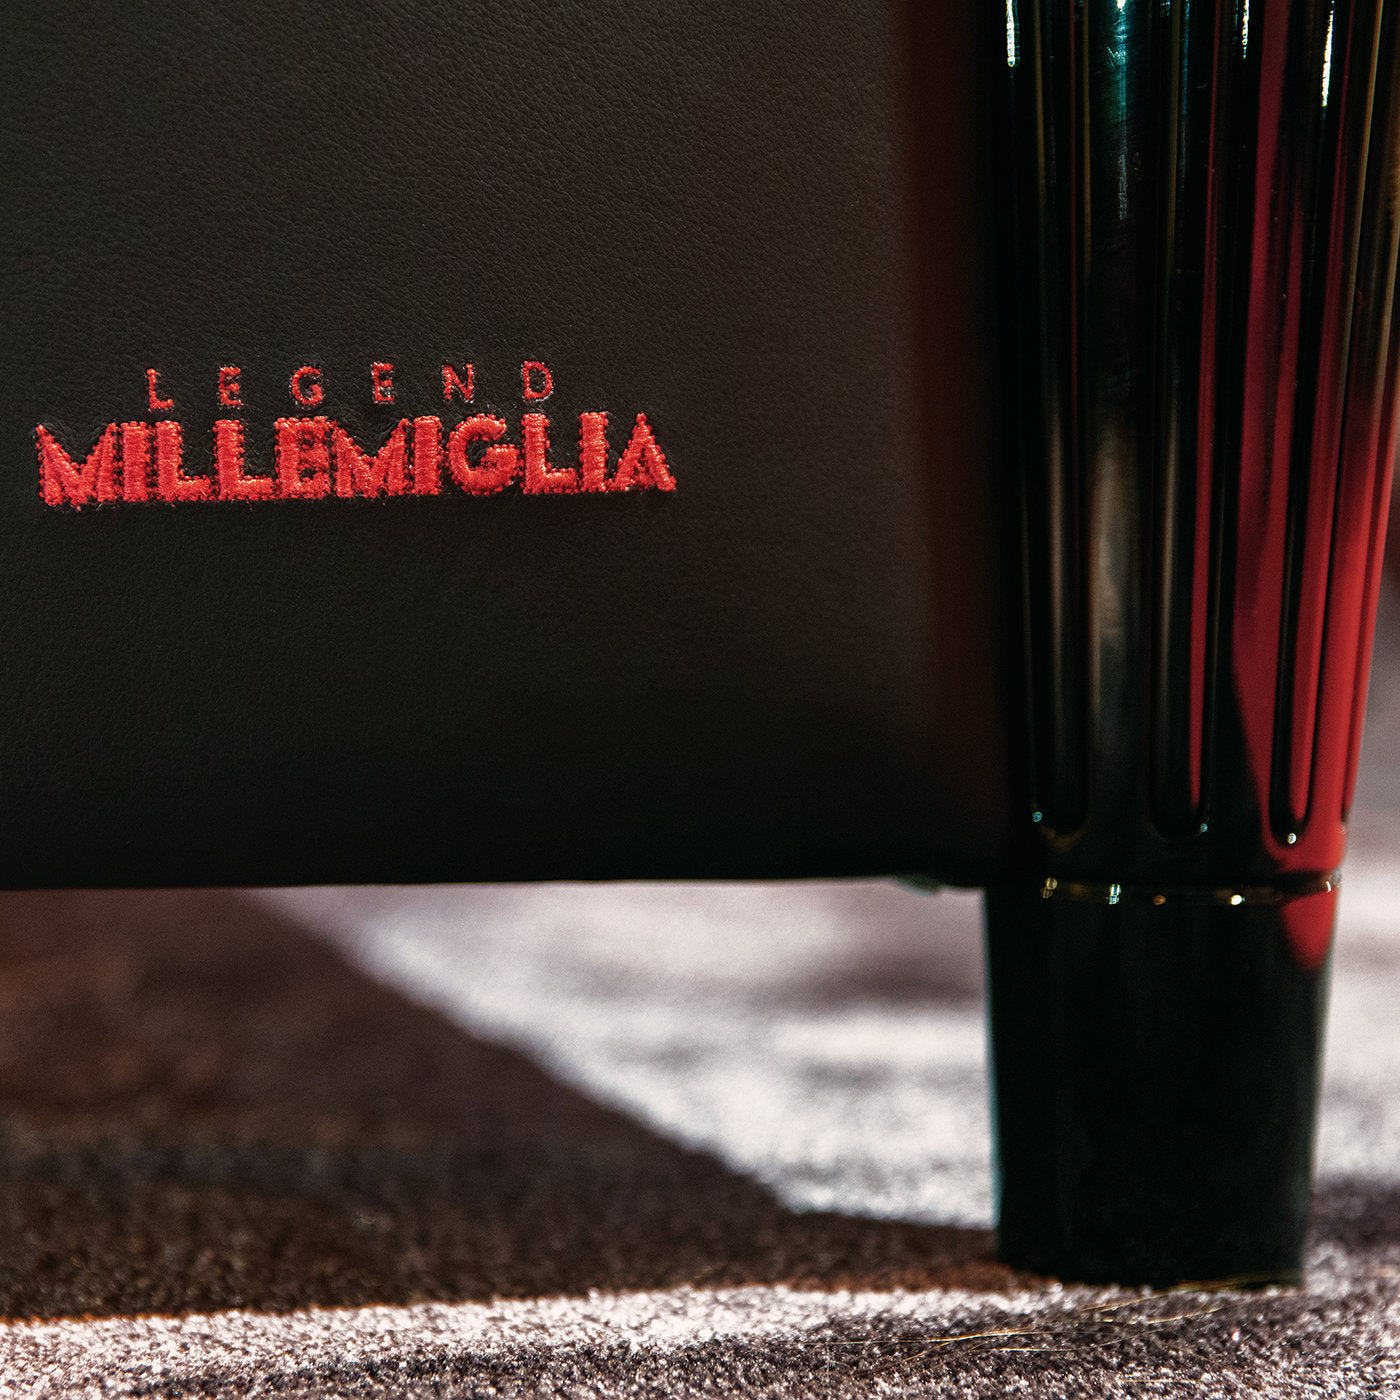 Legend Armchair Millemiglia Special Edition - Alternative view 1